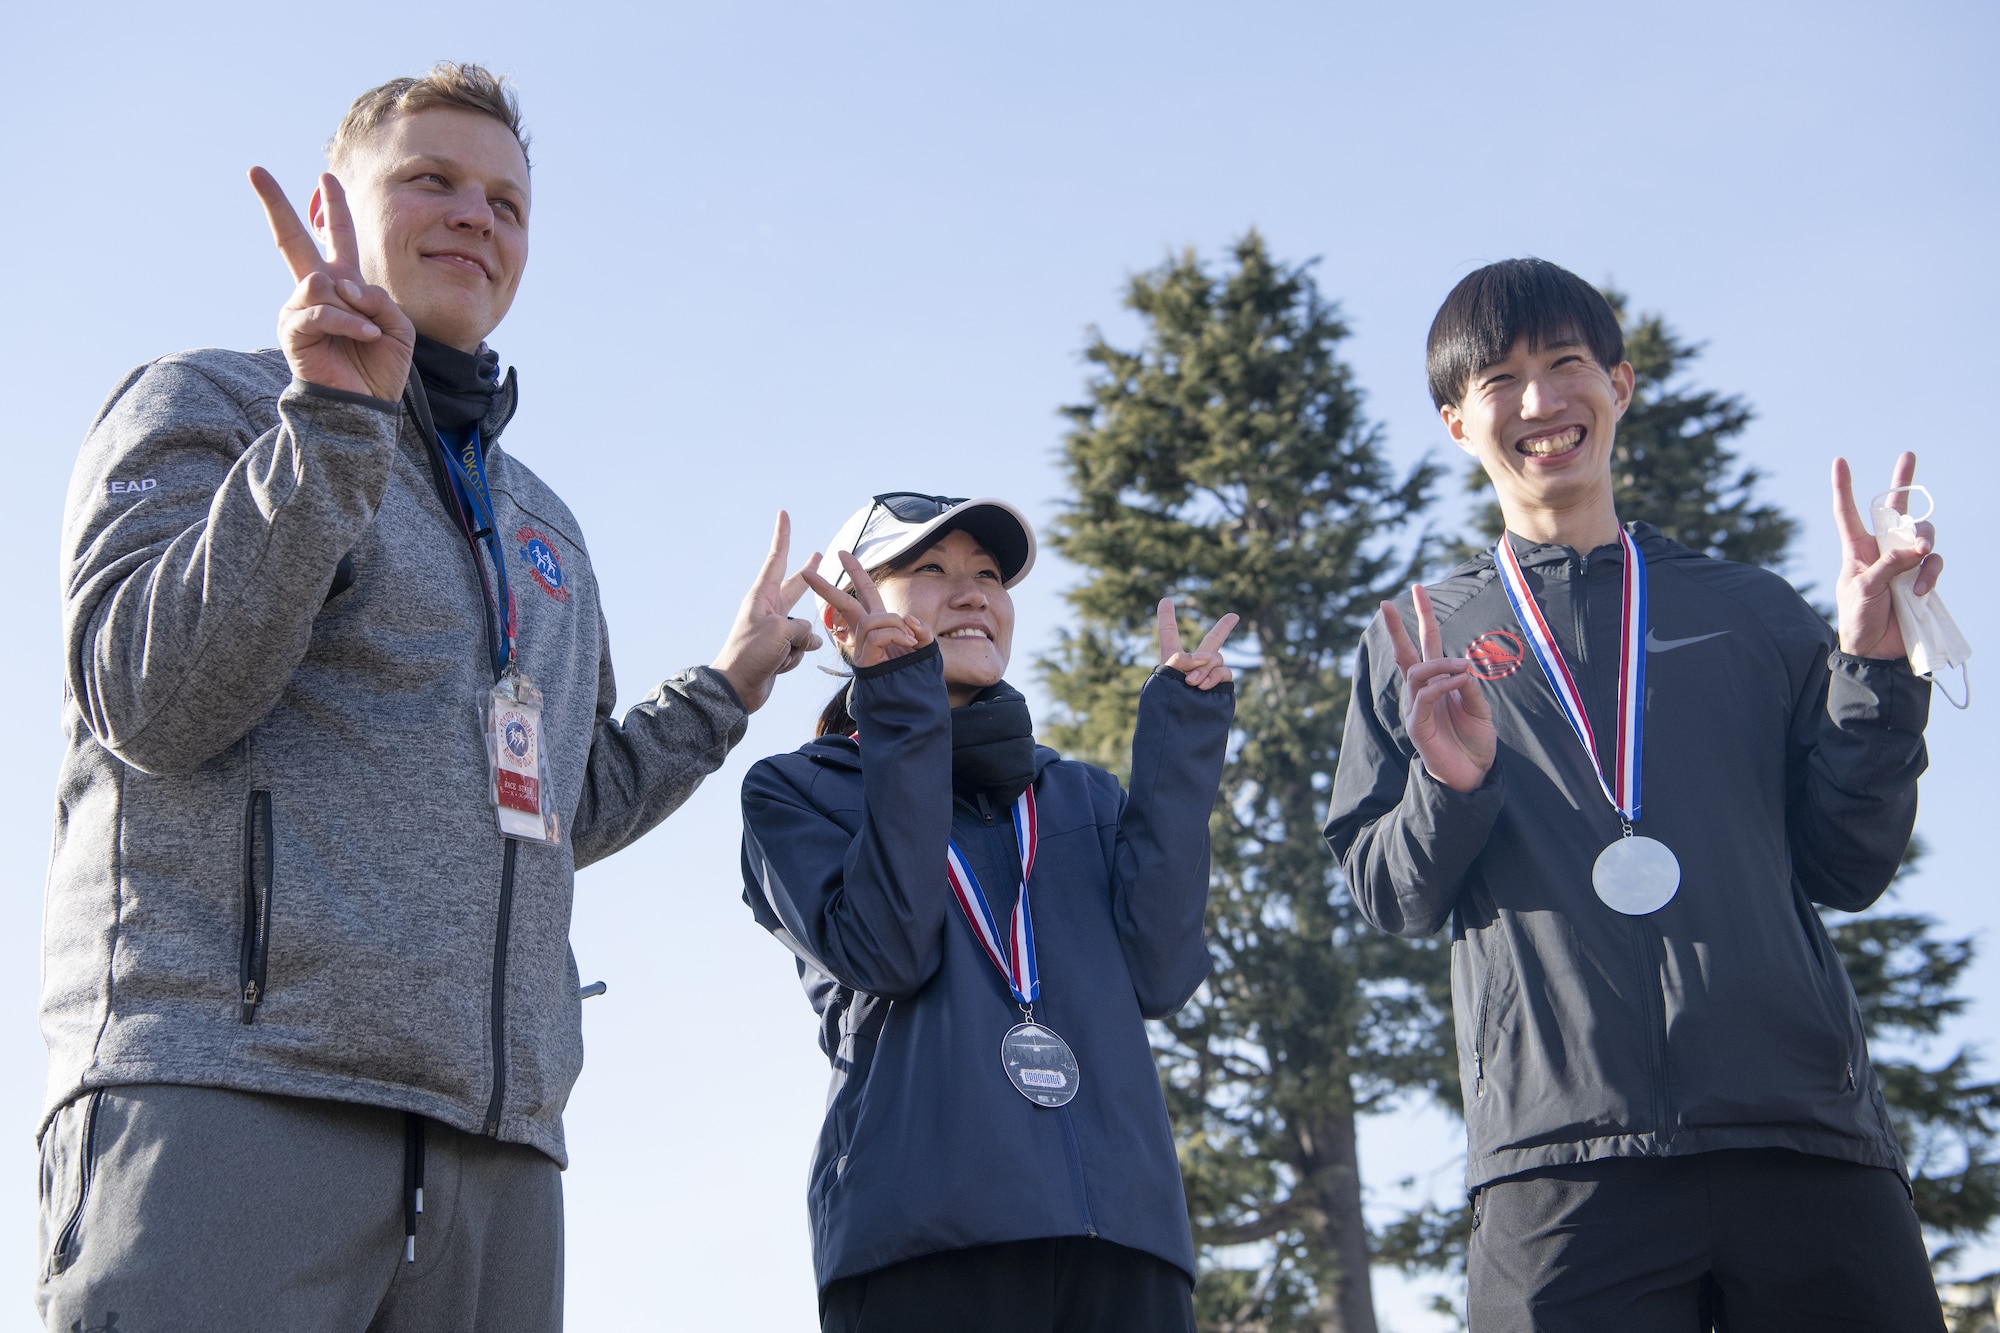 Master Sgt. Tobi Wagner, left, congratulates Mutsumi Nomura, center, and Shogo Akazawa, right, for earning a medal in the men and women’s half-marathon event.